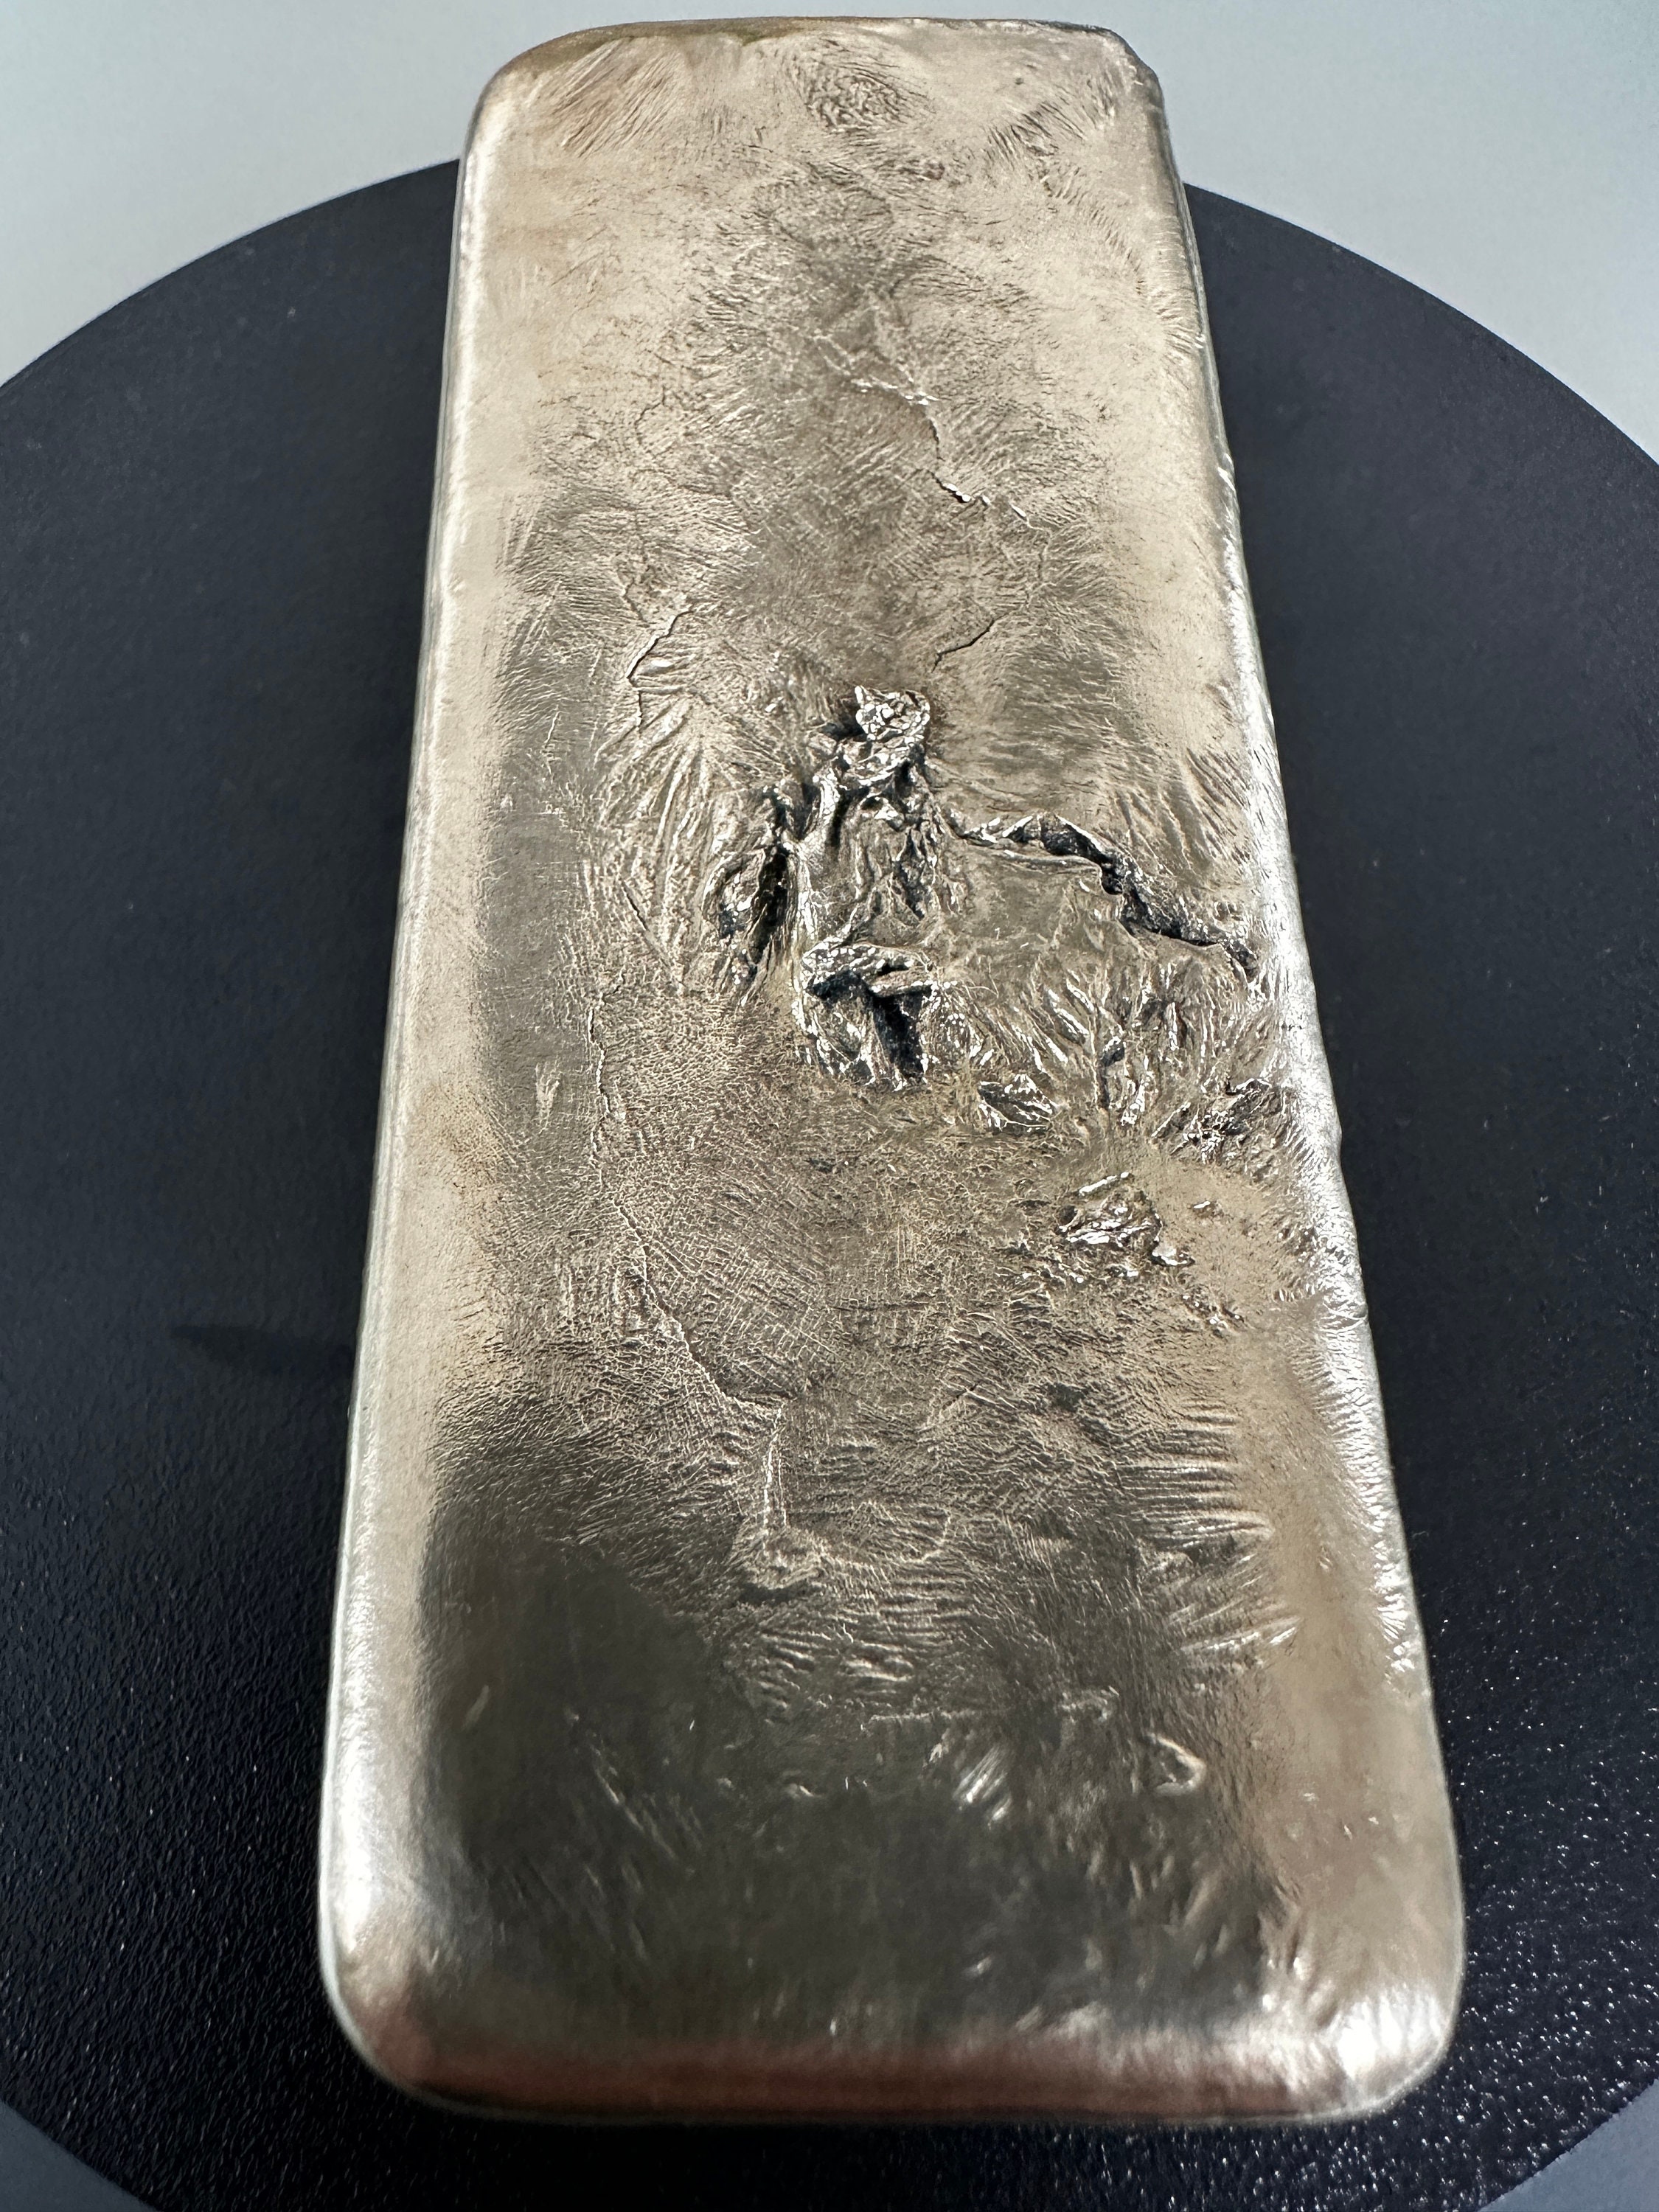 Cast iron Ingot mould 50oz or 1.5kg crucible melt Gold, silver platinum  scrap metals (730D)